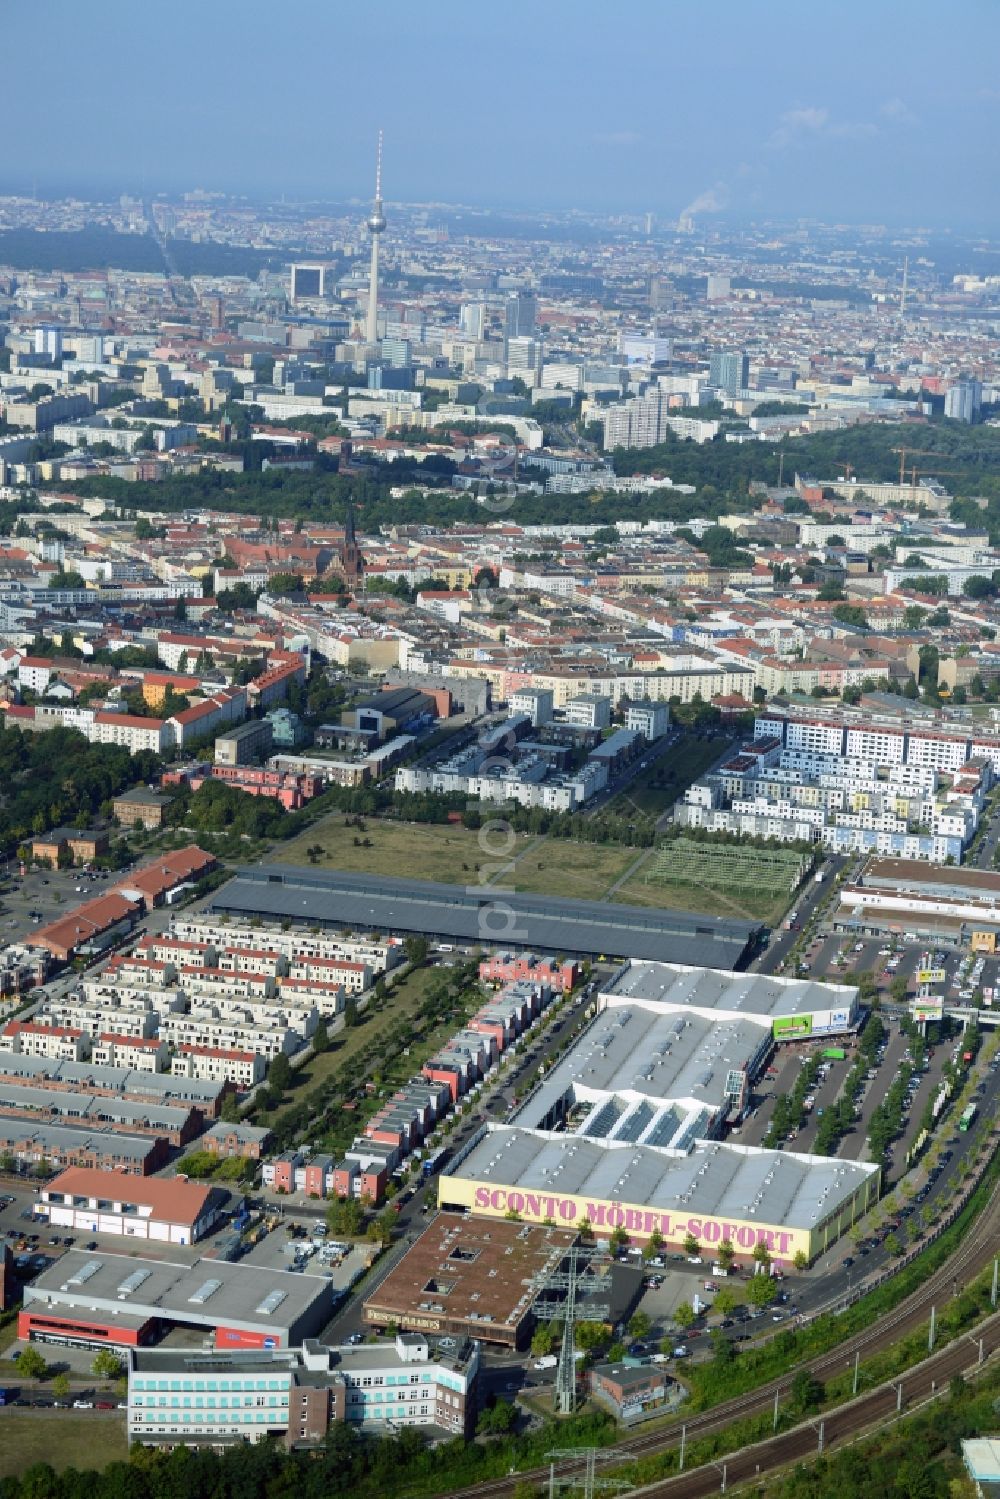 Aerial photograph Berlin Friedrichshain - Residential development areas in the development area at the Eldenaer street in Berlin - Friedrichshain